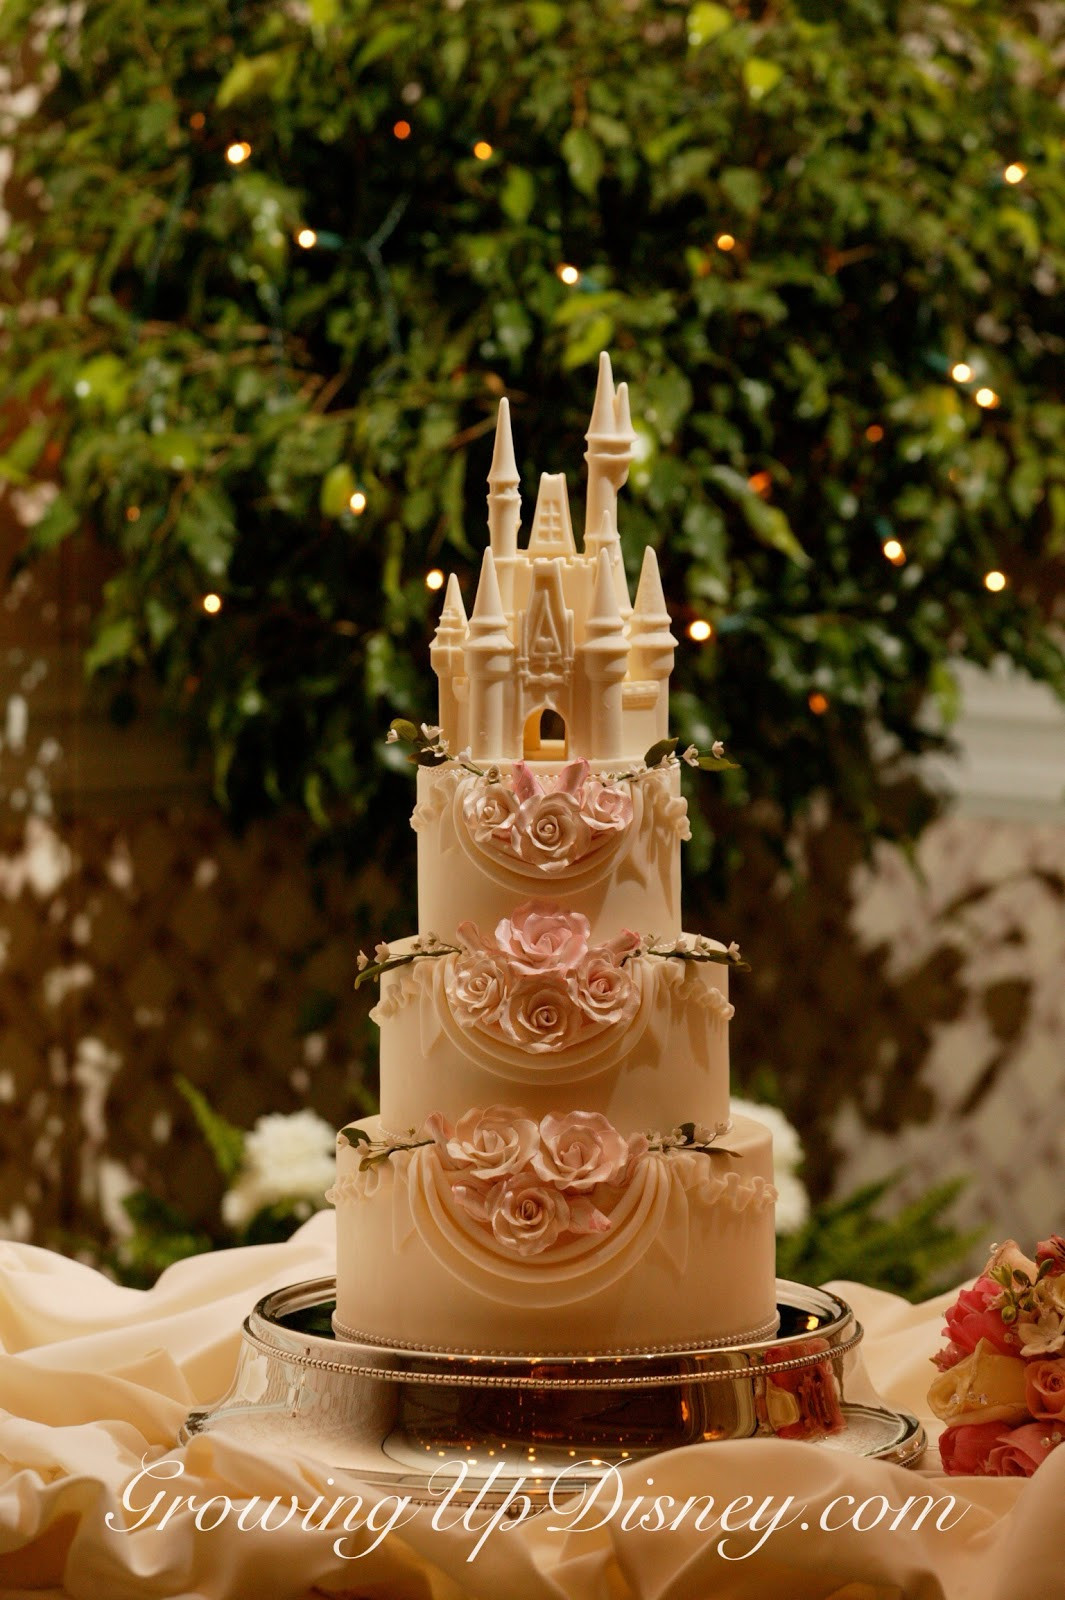 Castle Wedding Cakes
 Growing Up Disney Disney s Fairy Tale Weddings s